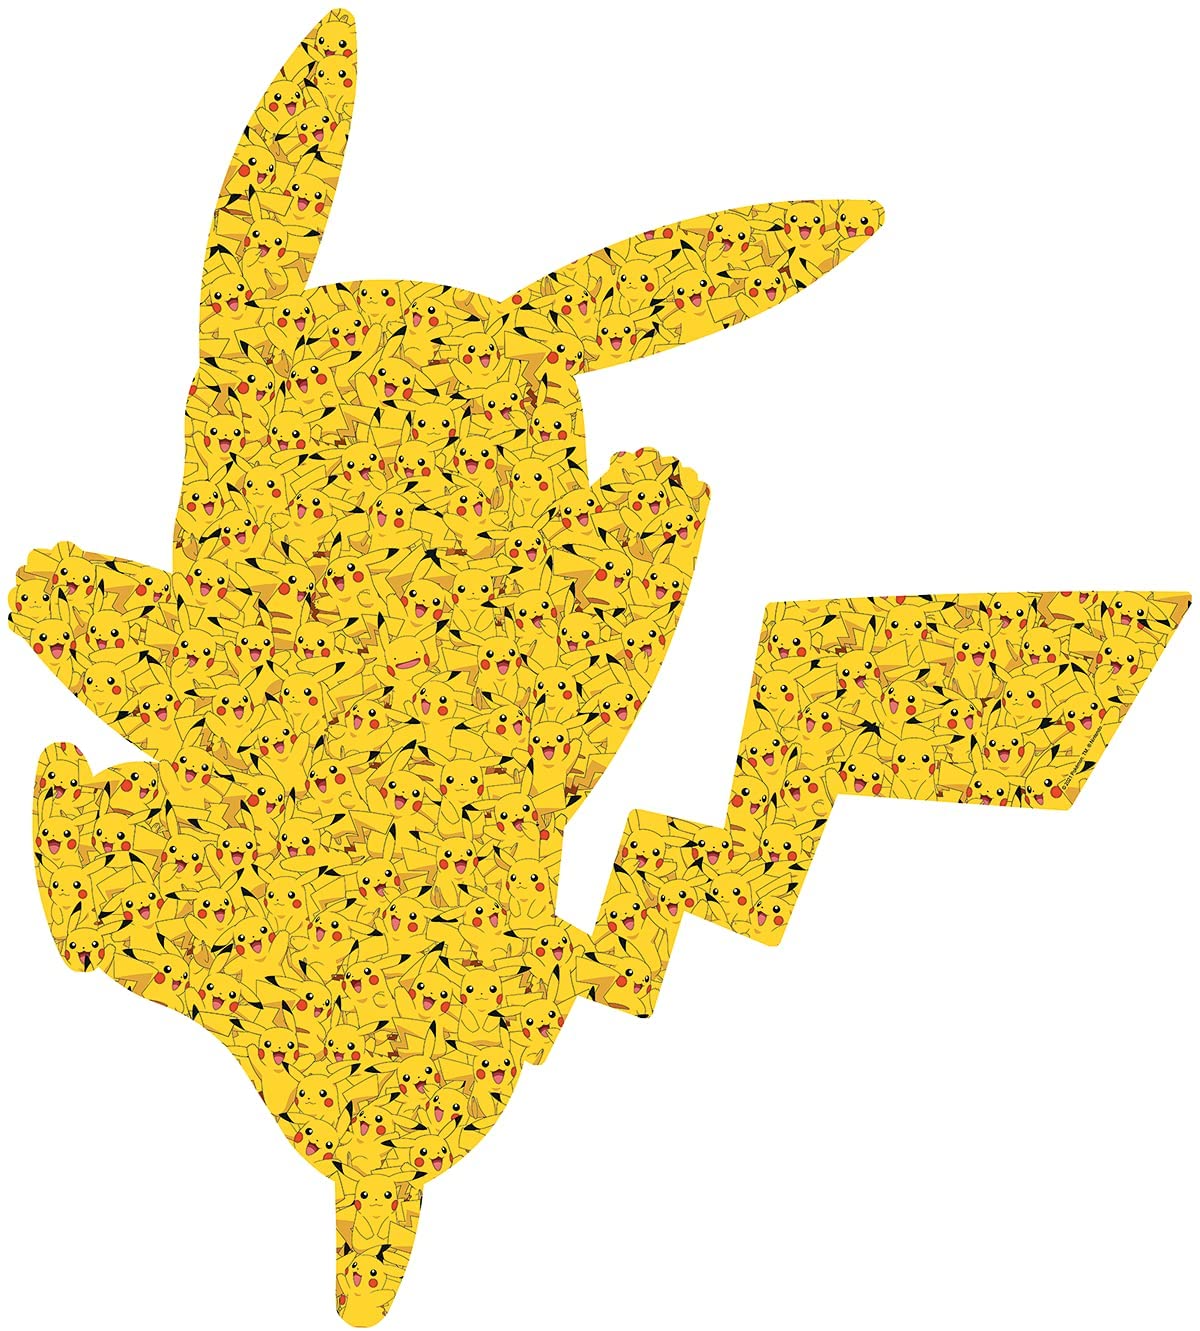 Buffalo Games Pokemon Pikachu Shaped - 500 Pieces Jigsaw Puzzle